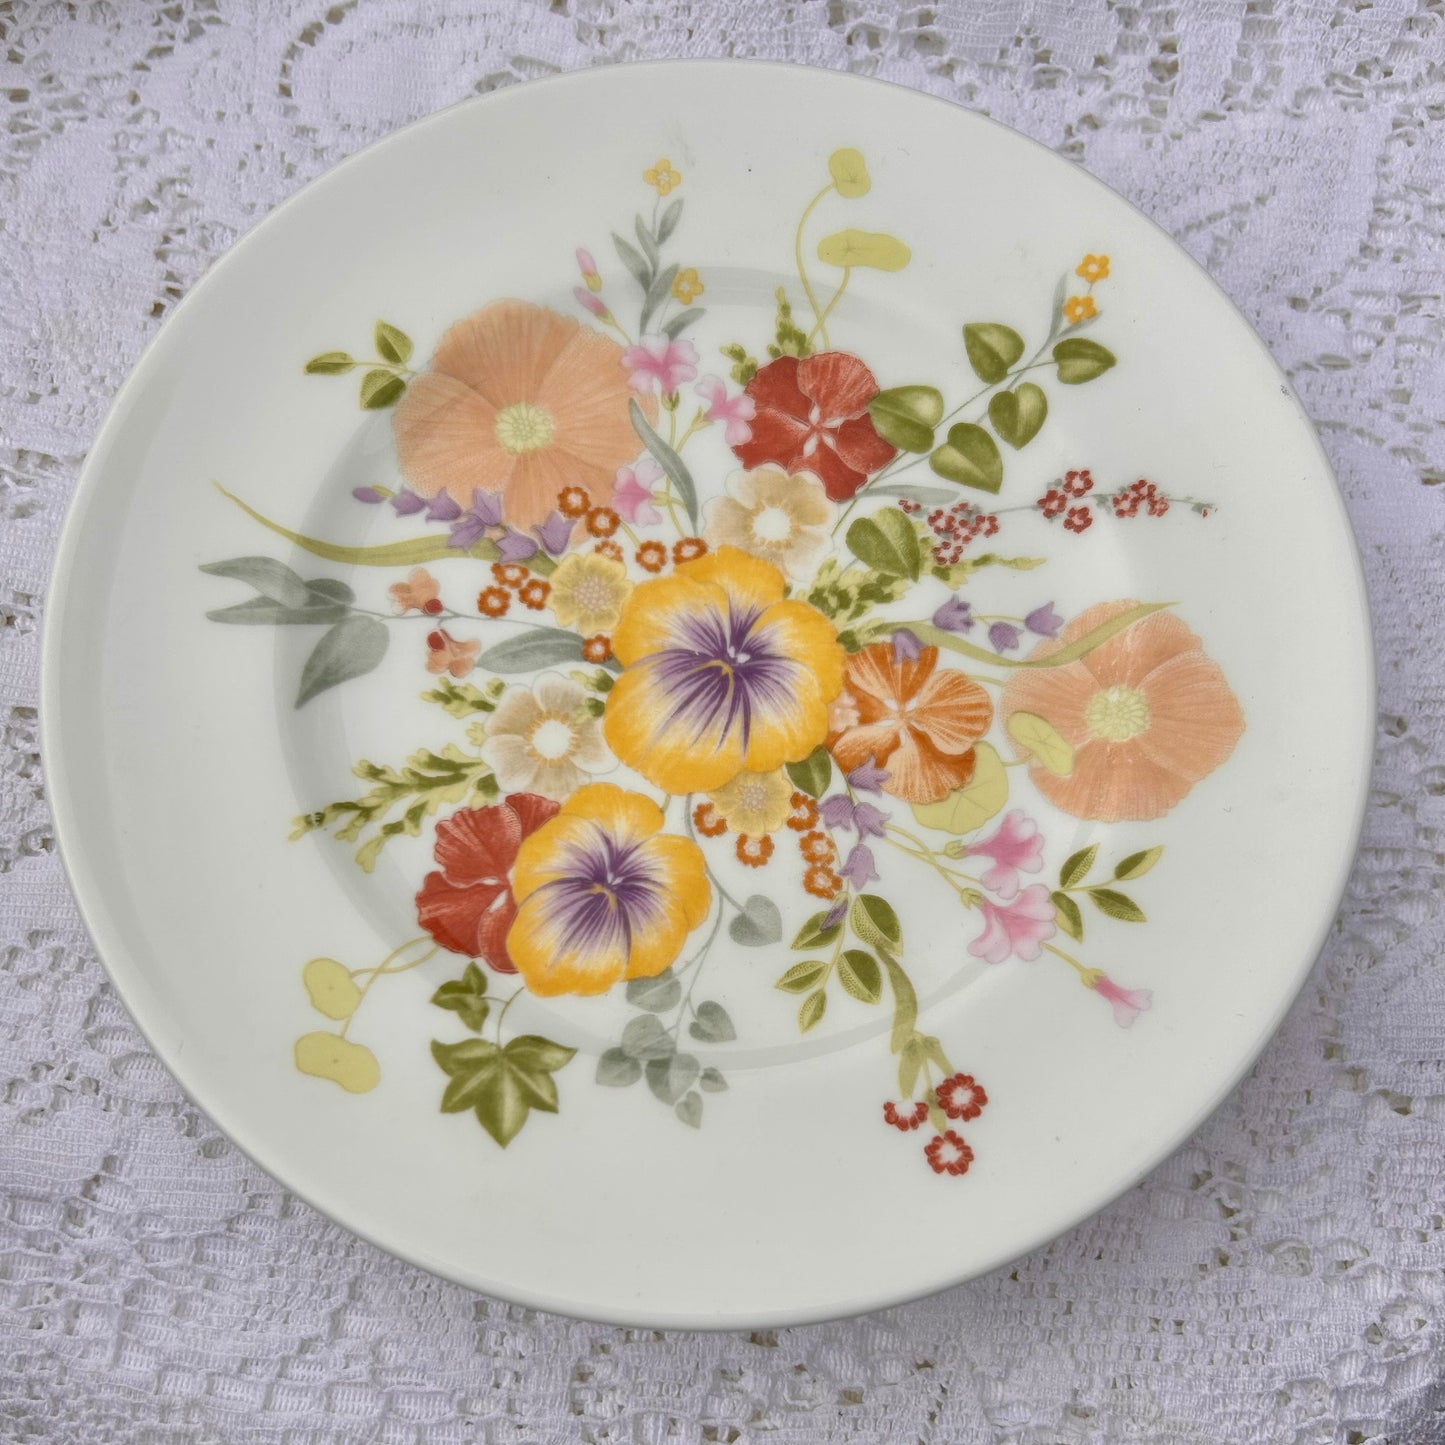 6 Wedgwood Summer Bouquet Plates 16cm English bone china replacements orange yellow flowers